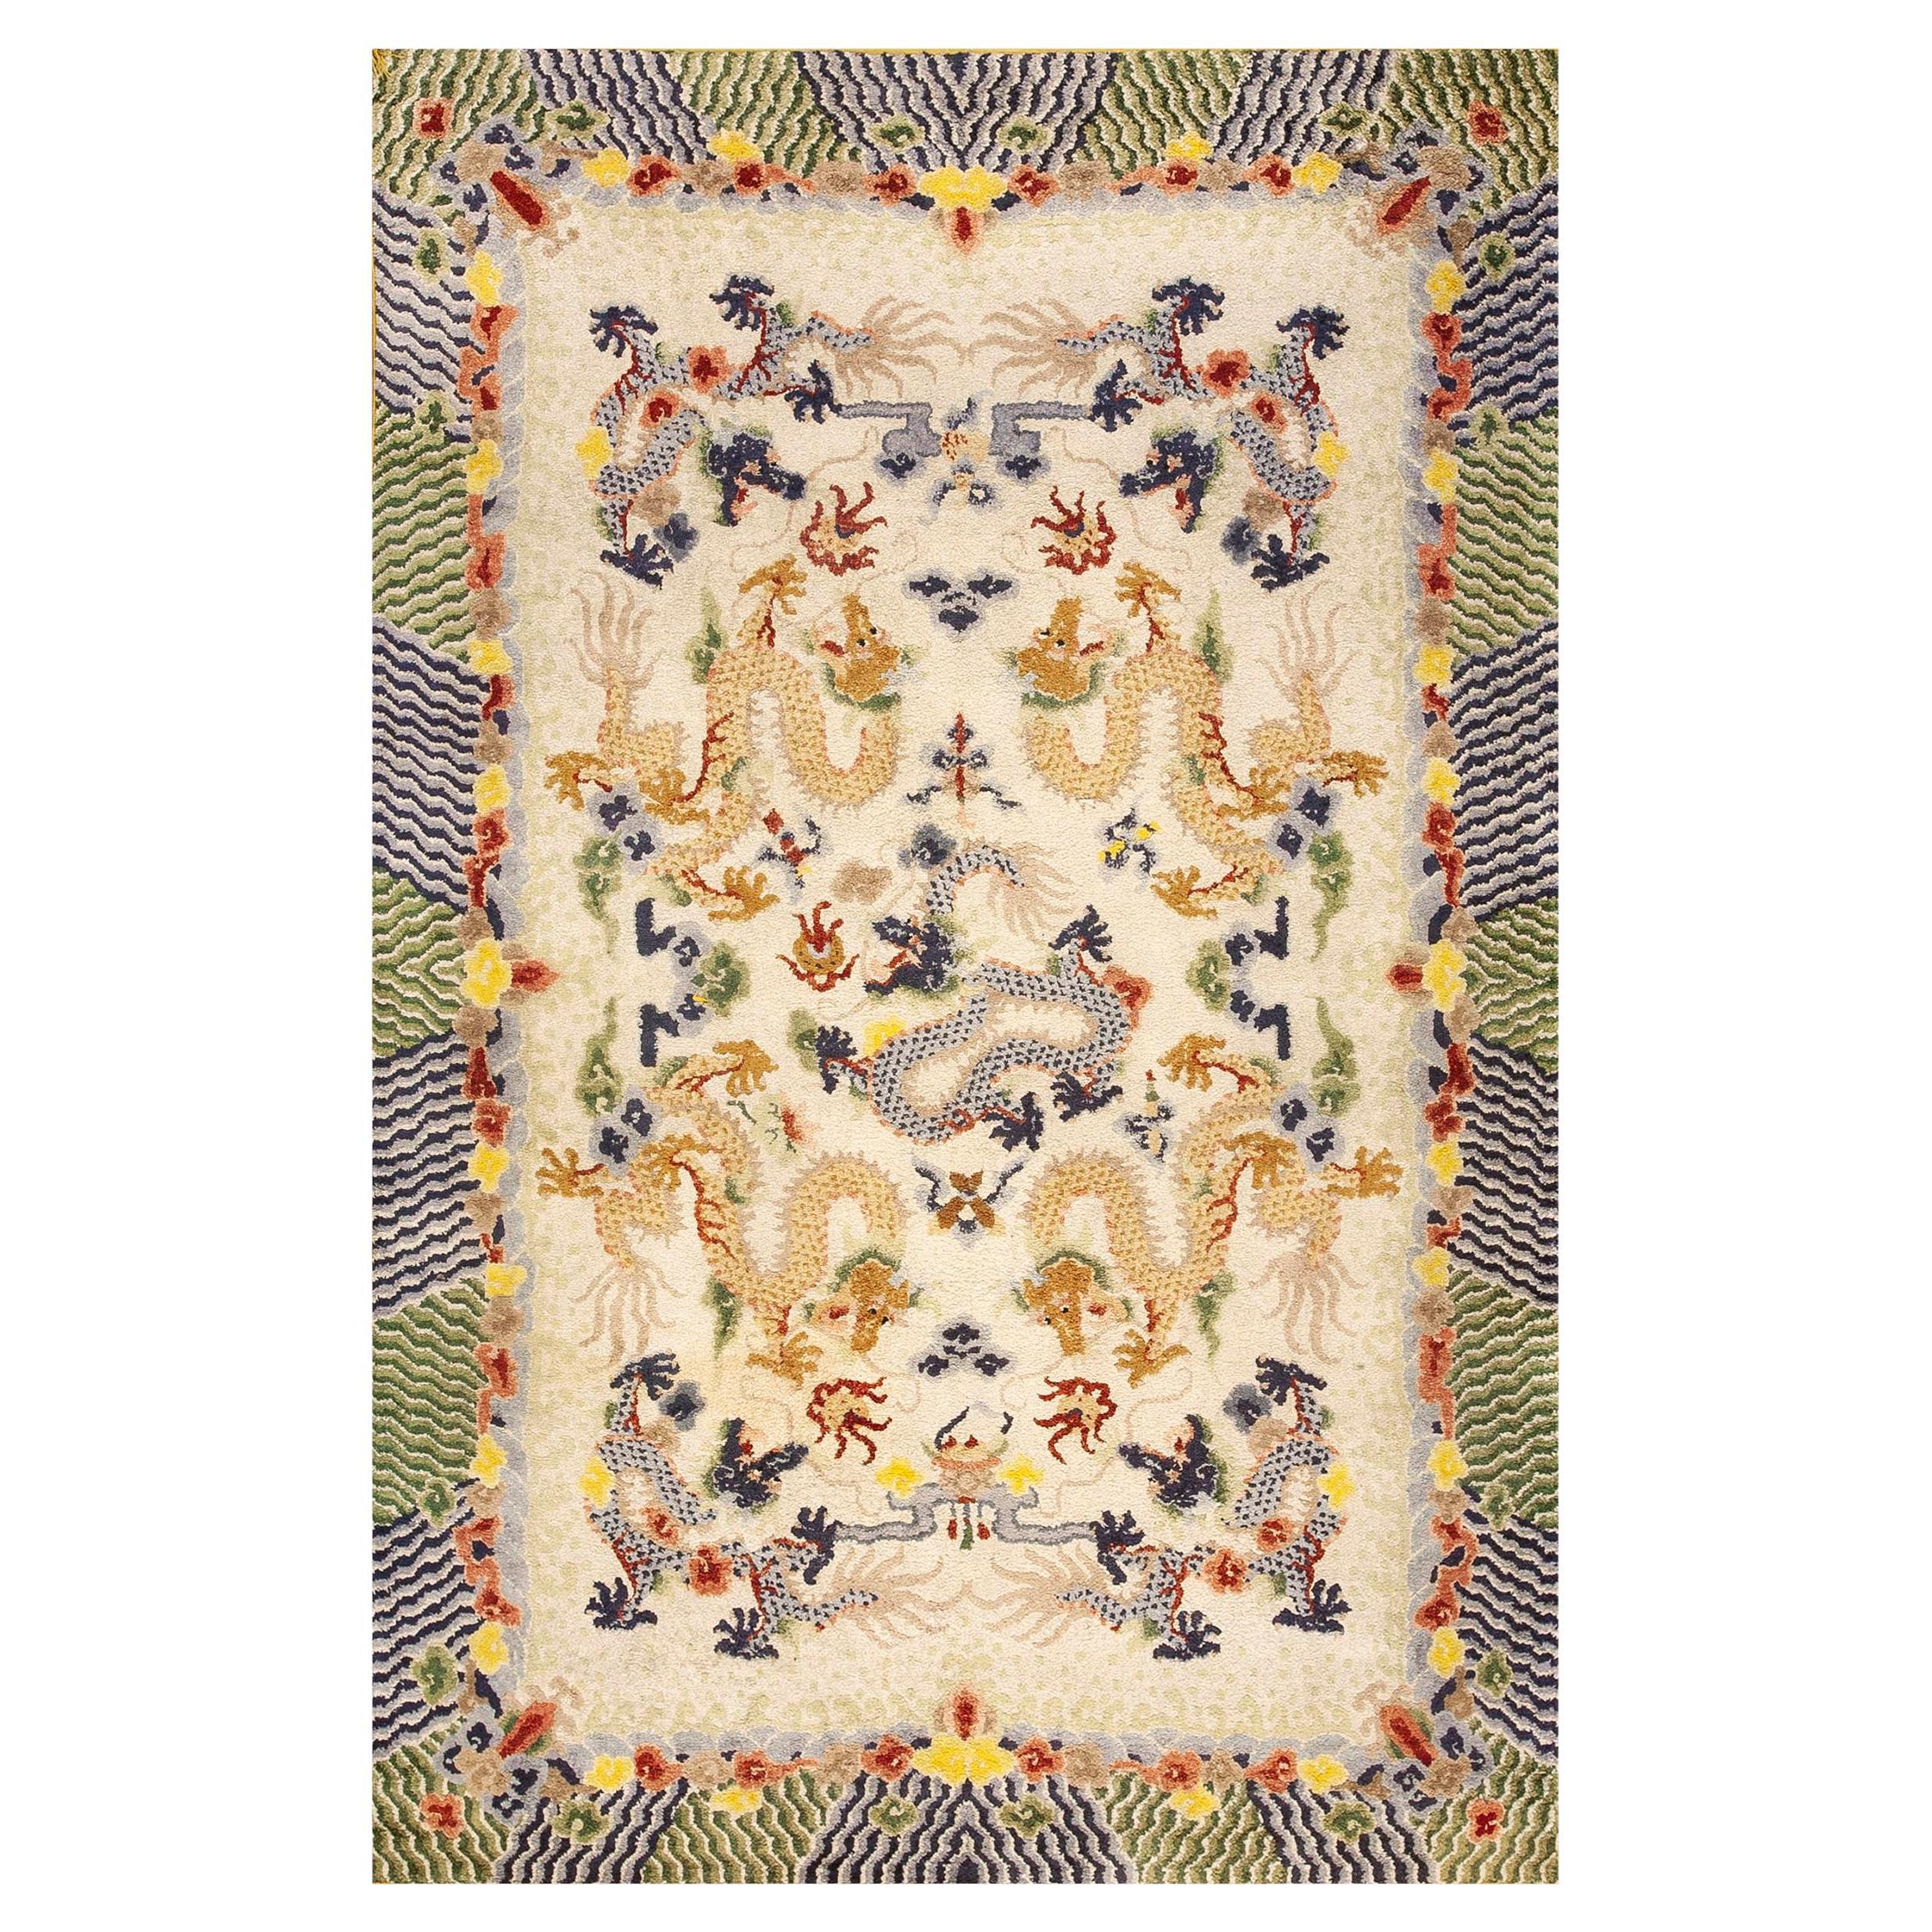 Early 20th Century Chinese Silk Dragon Carpet ( 5' x 8' - 152 x 244 )